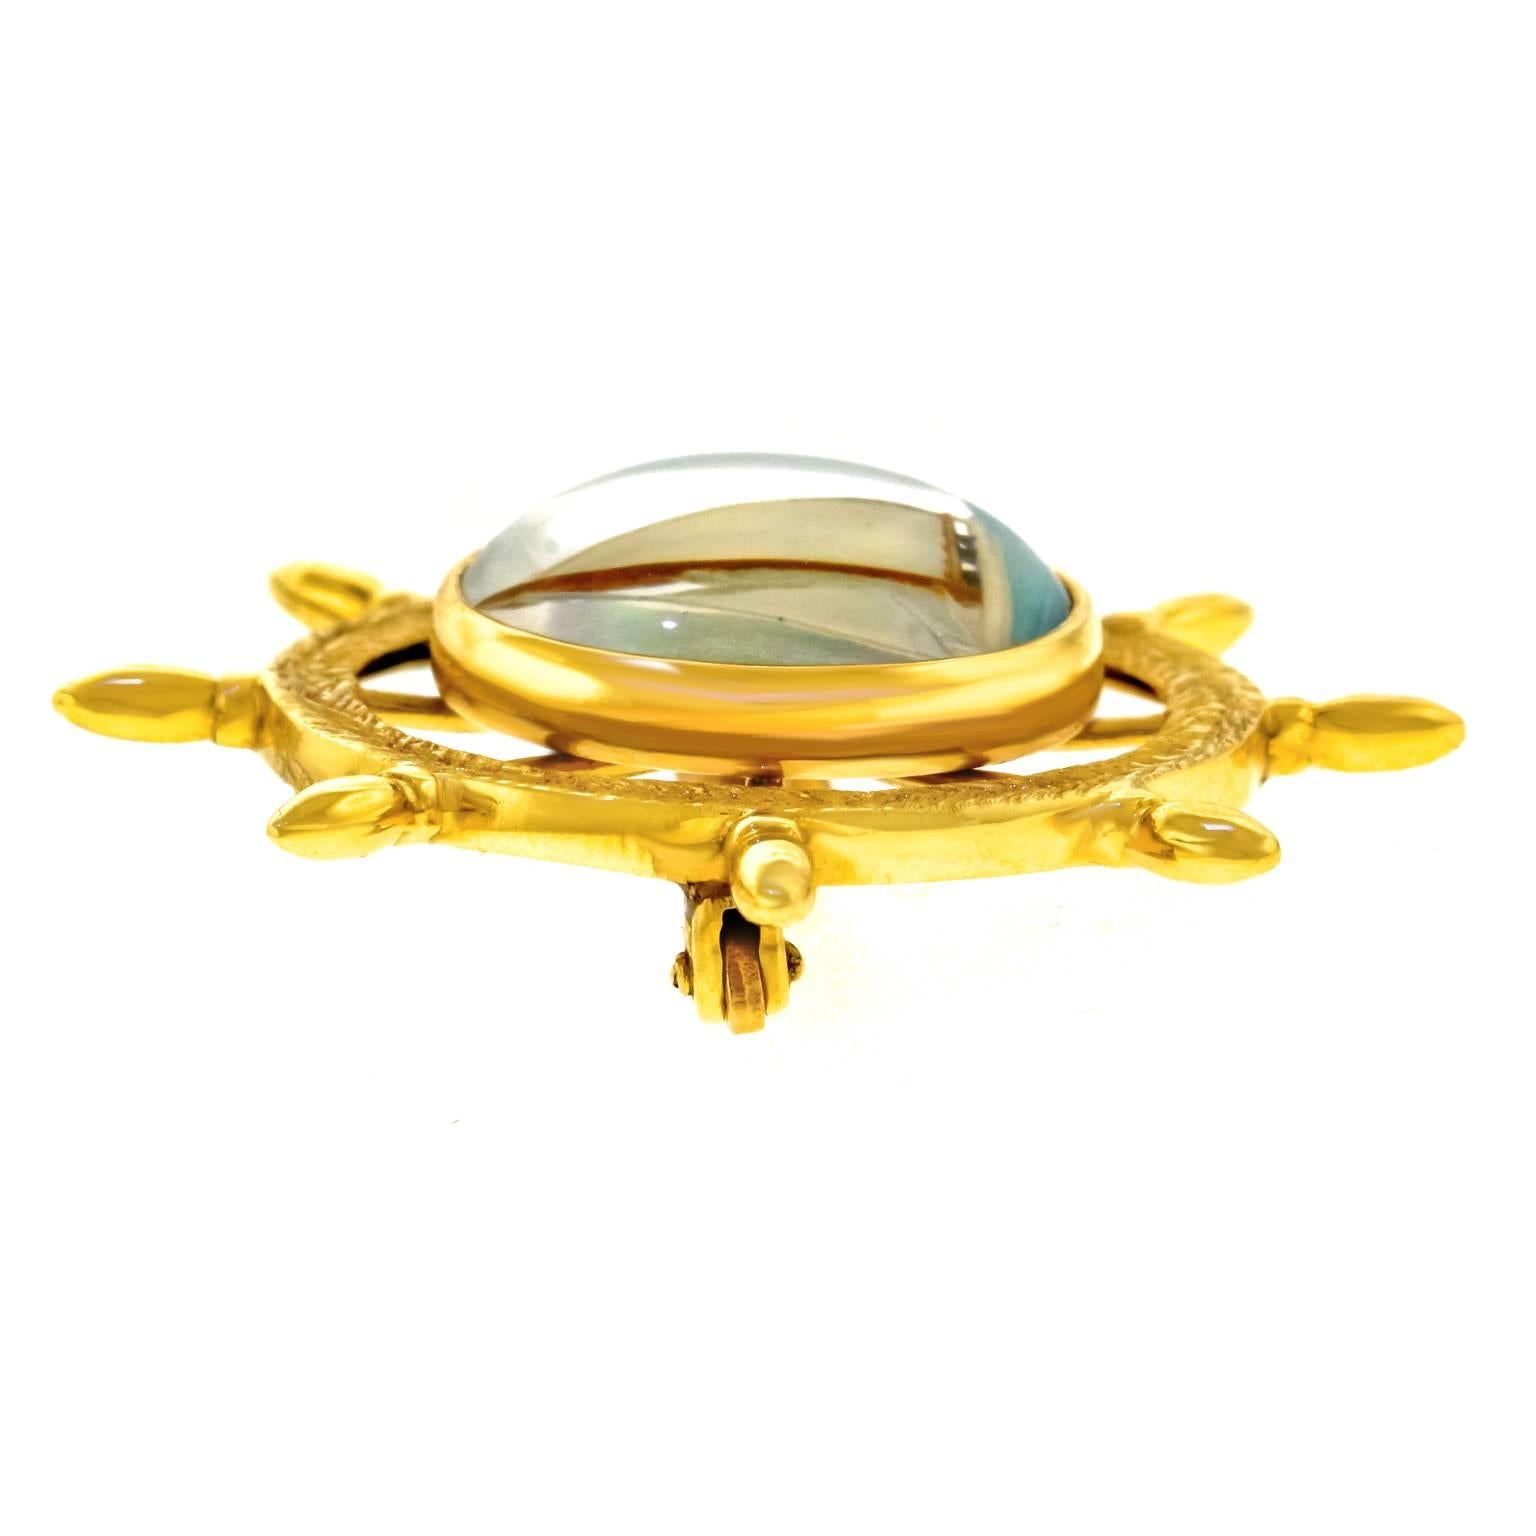 Nautical Theme Essex Crystal Gold Brooch 4